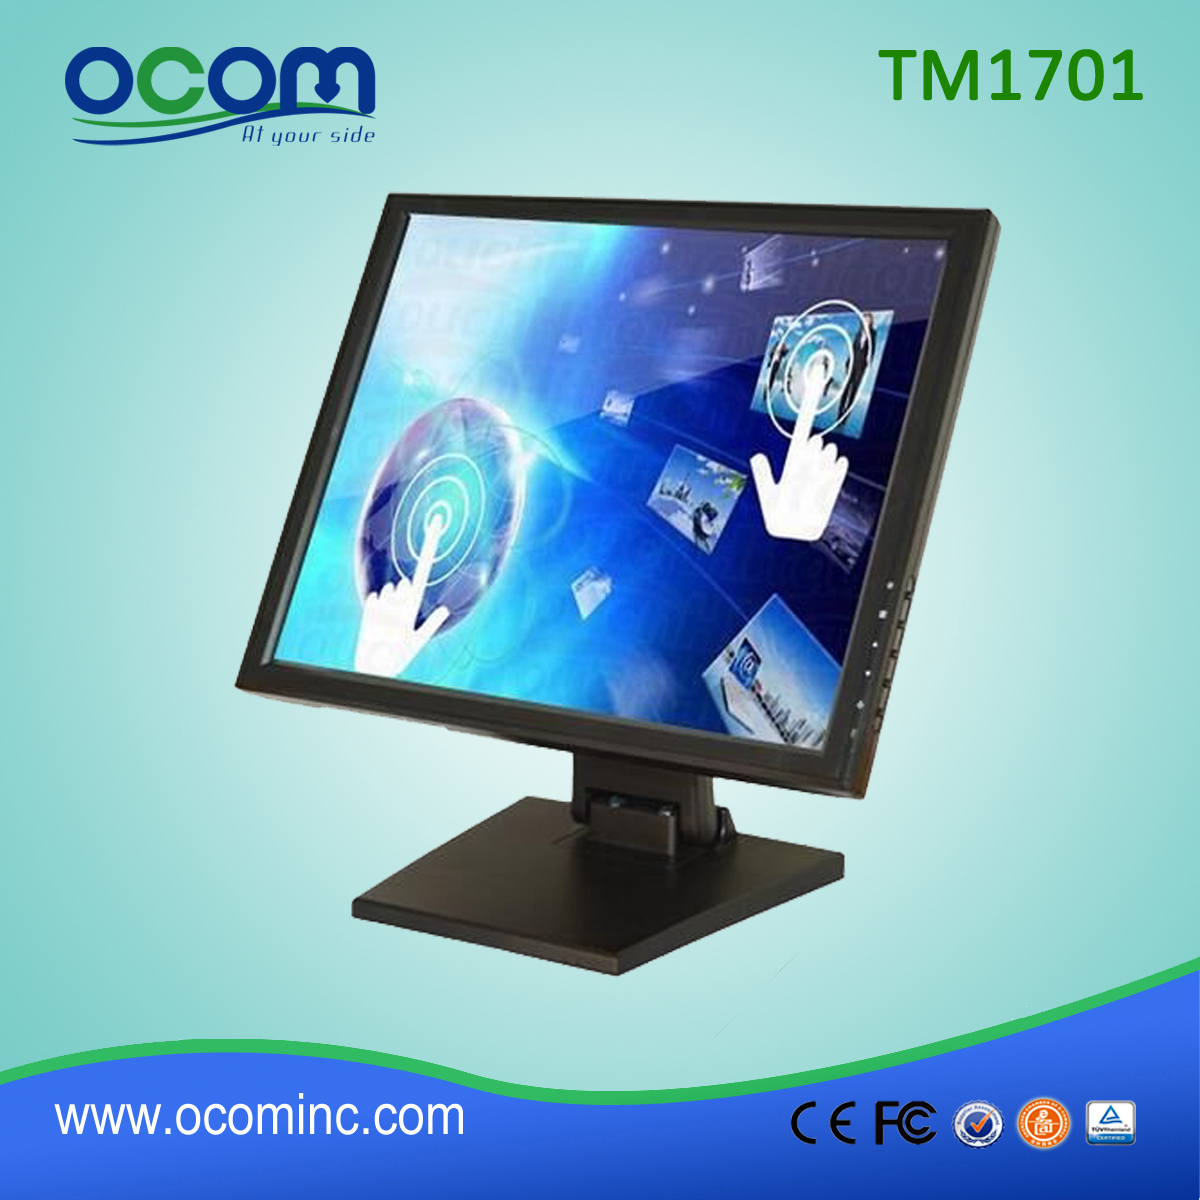 Tela TM1701 Flexível POS Touch System LCD